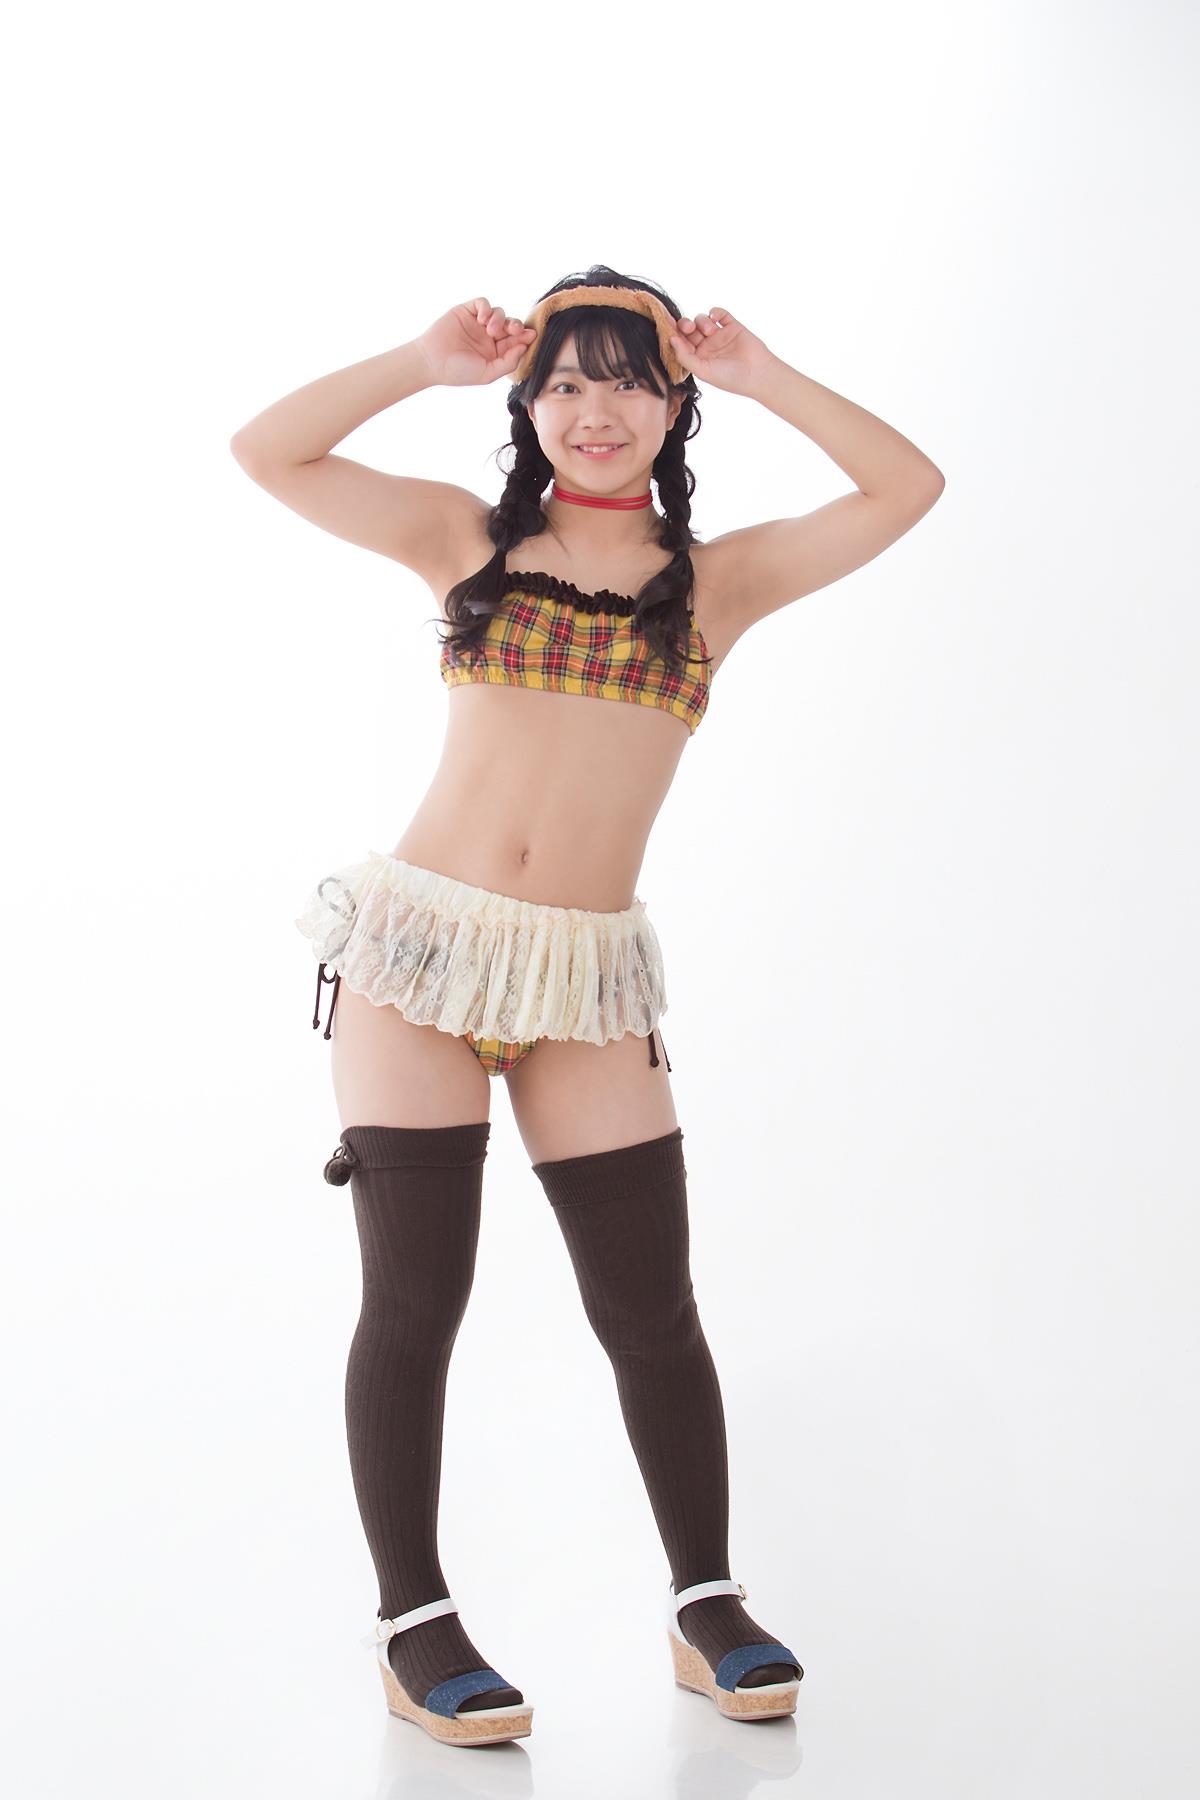 Minisuka.tv Saria Natsume 夏目咲莉愛 - Premium Gallery 2.5 - 13.jpg